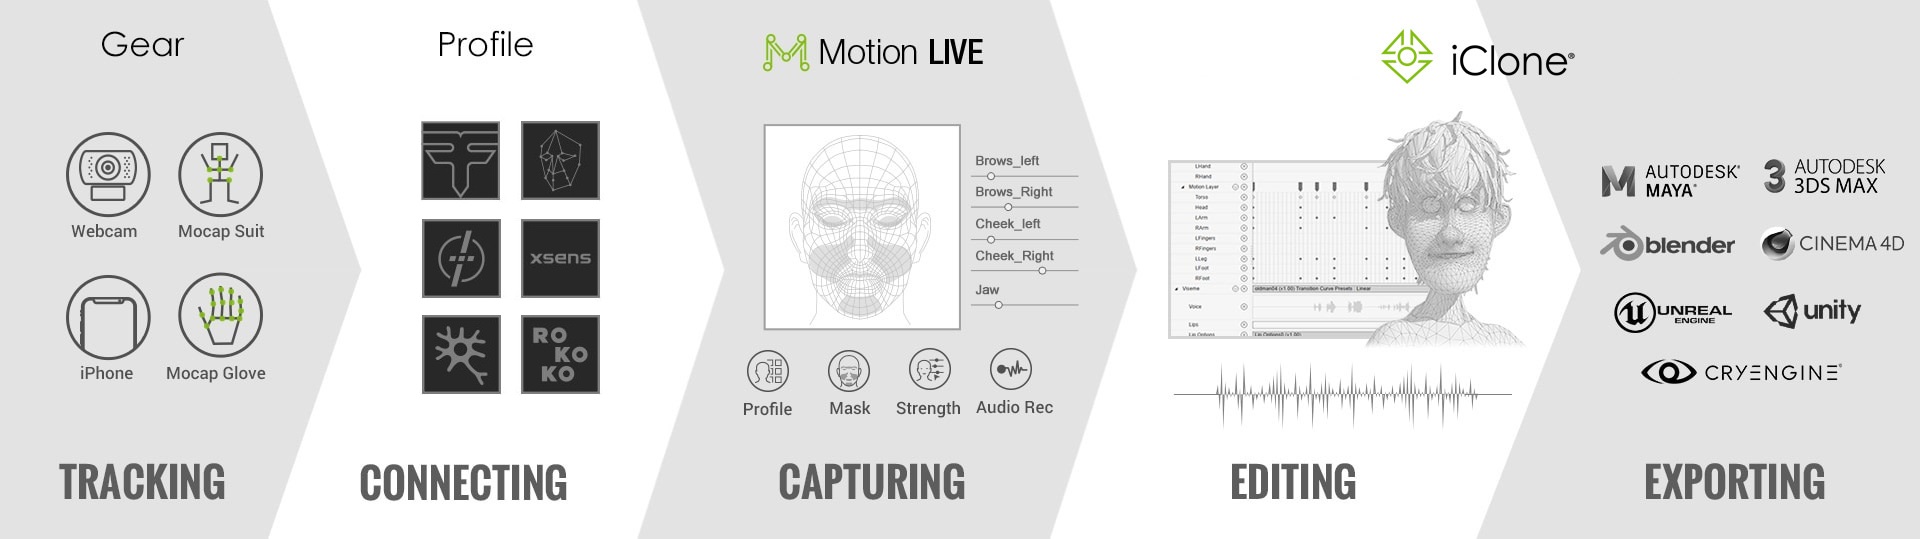 motion capture iclone